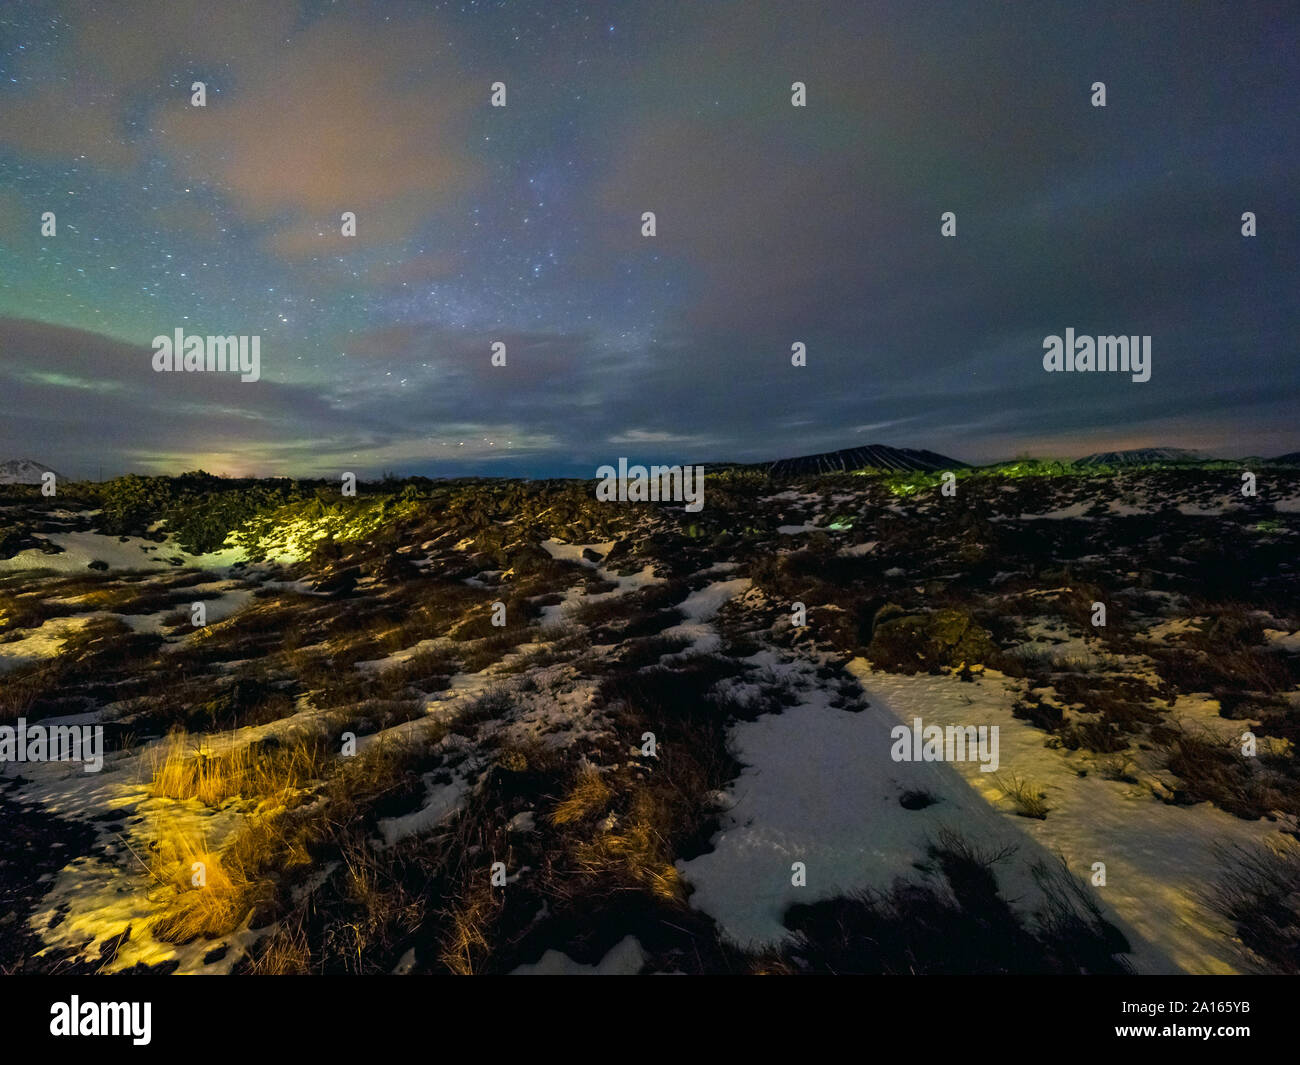 Iceland, Myvatn region at night with northern lights Stock Photo